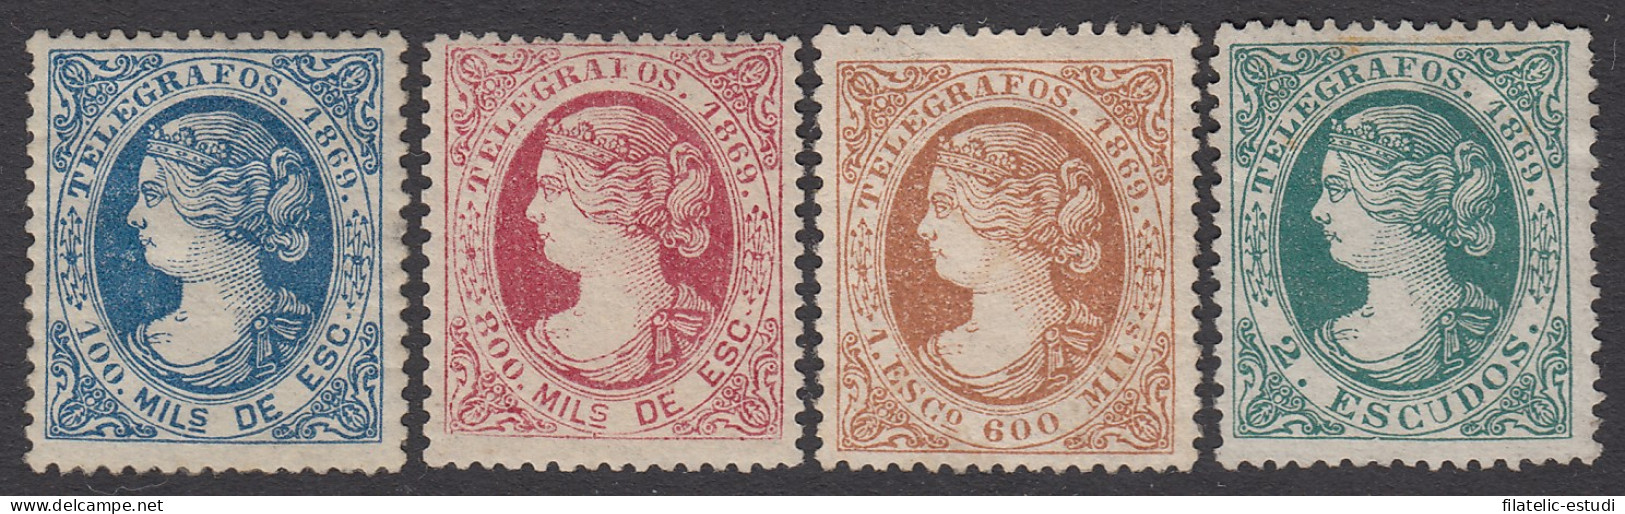 España Spain Telégrafos 26/29 1869 Isabel II  MH - Postage-Revenue Stamps